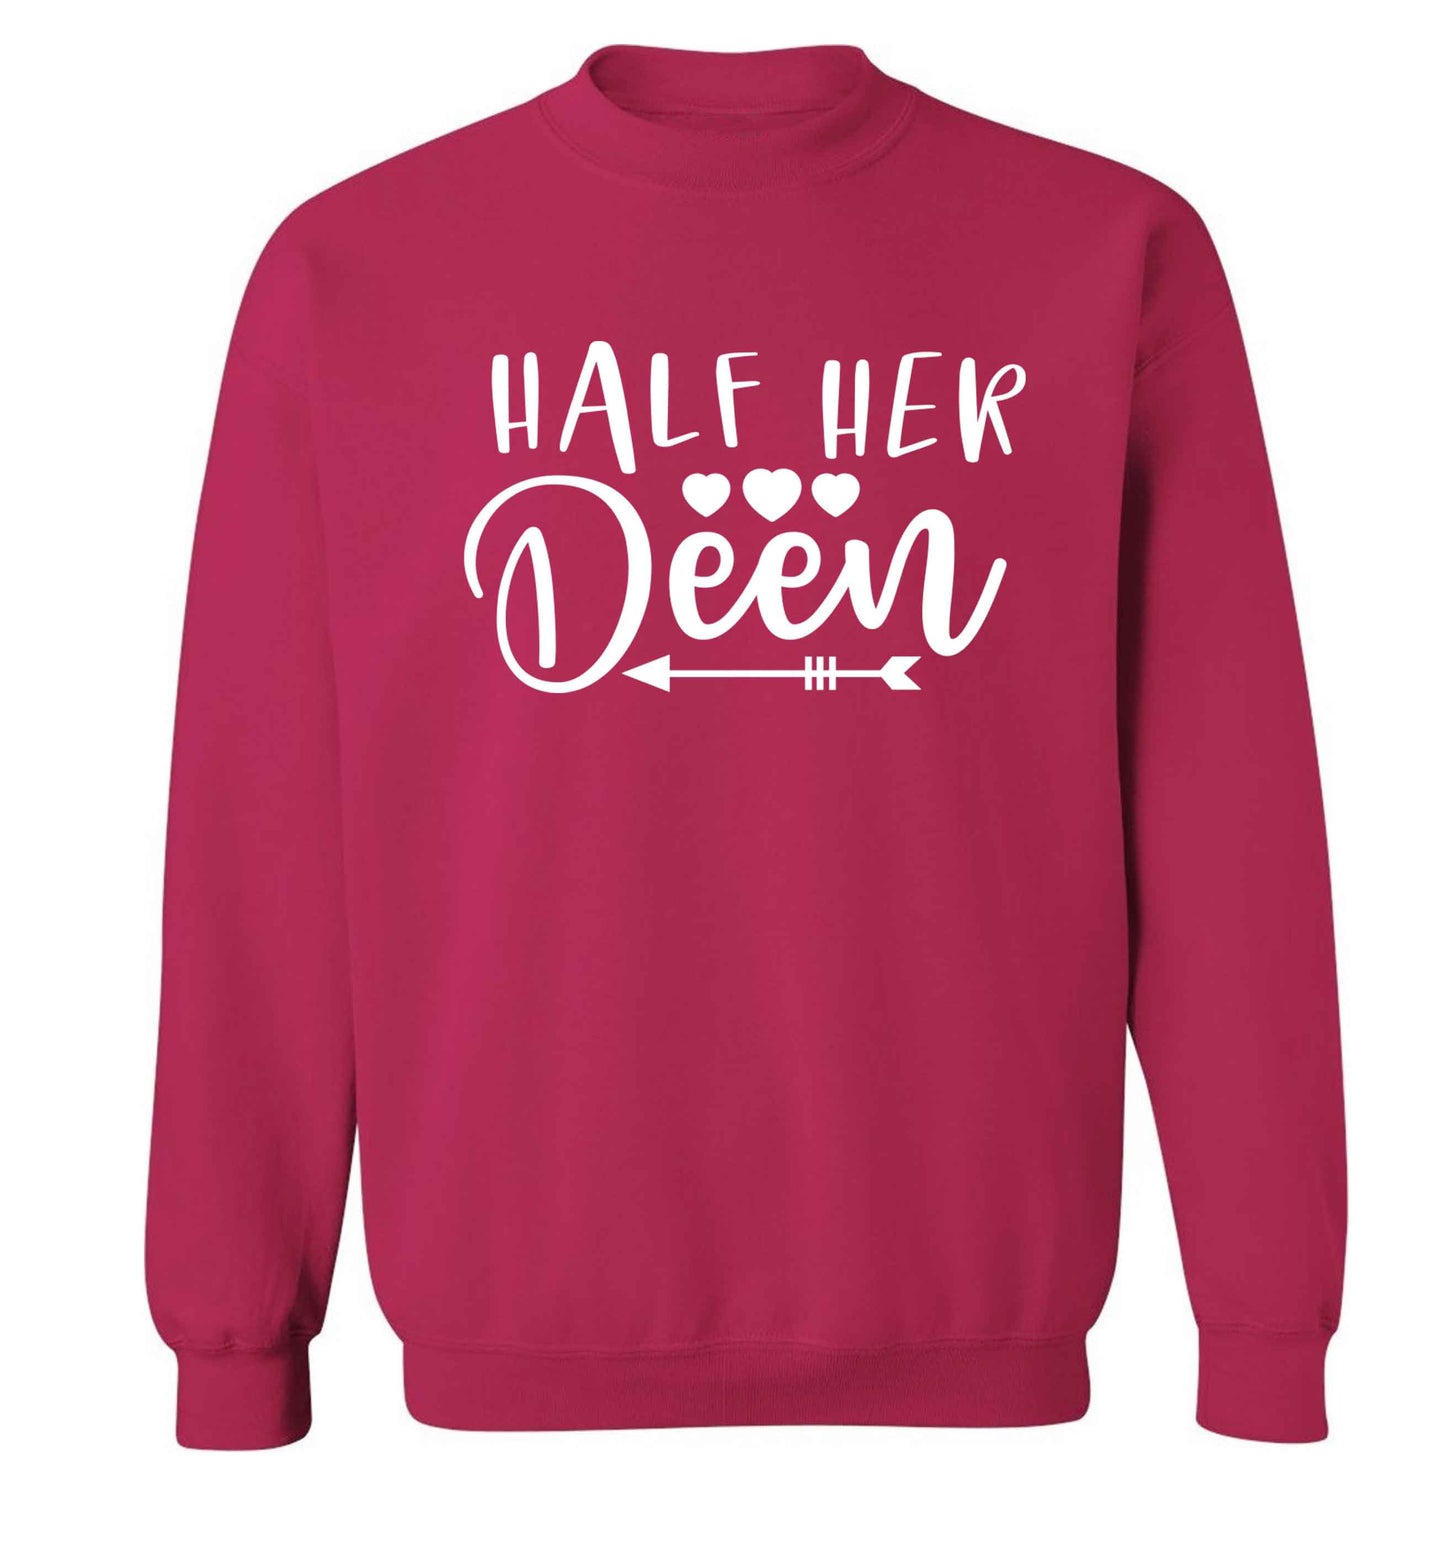 Half her deen Adult's unisex pink Sweater 2XL